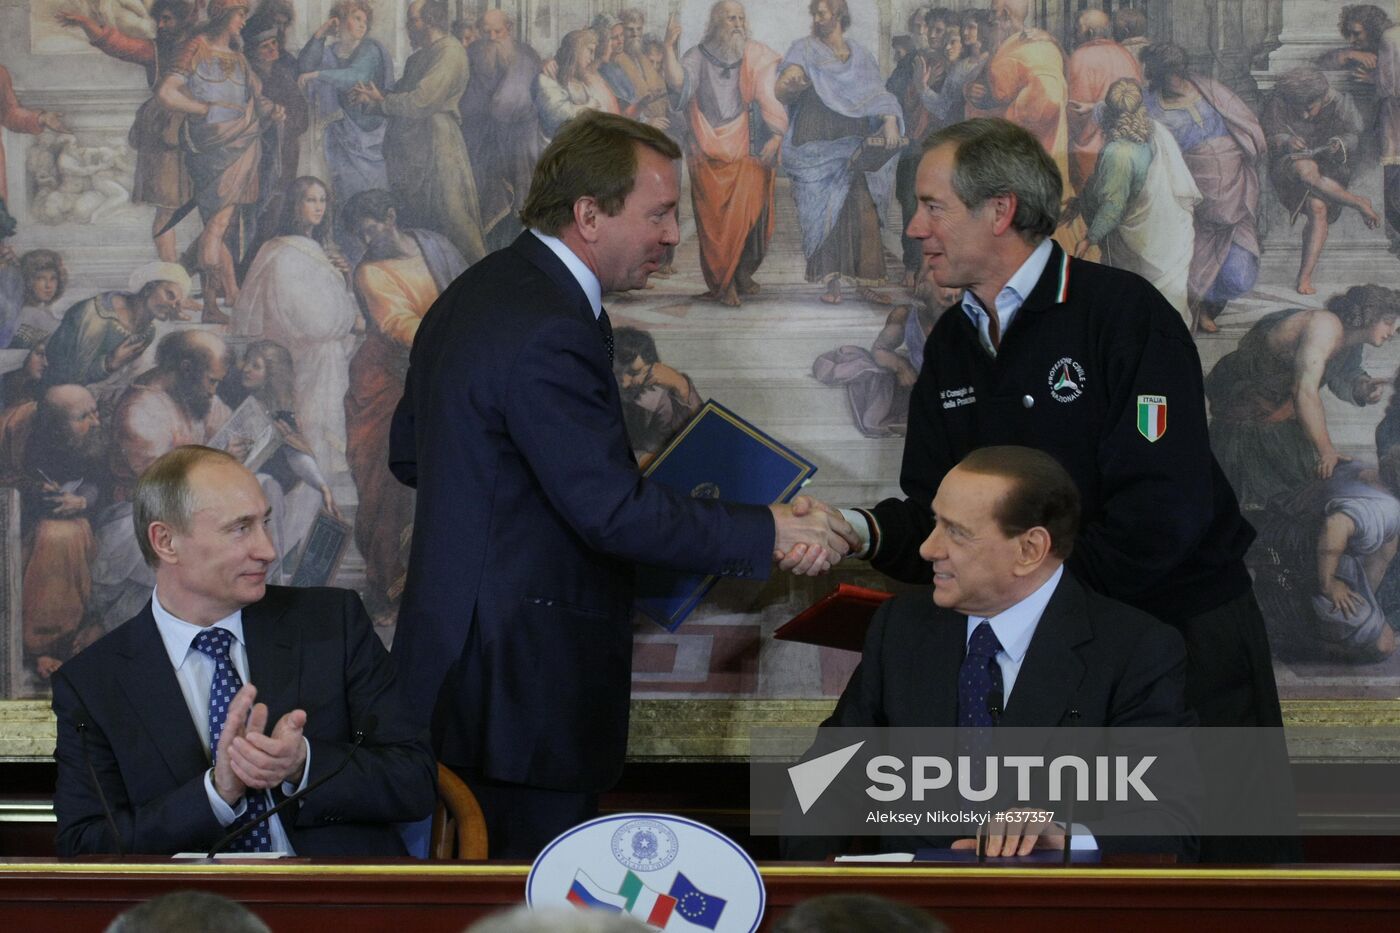 Signing Russian-Italian agreements